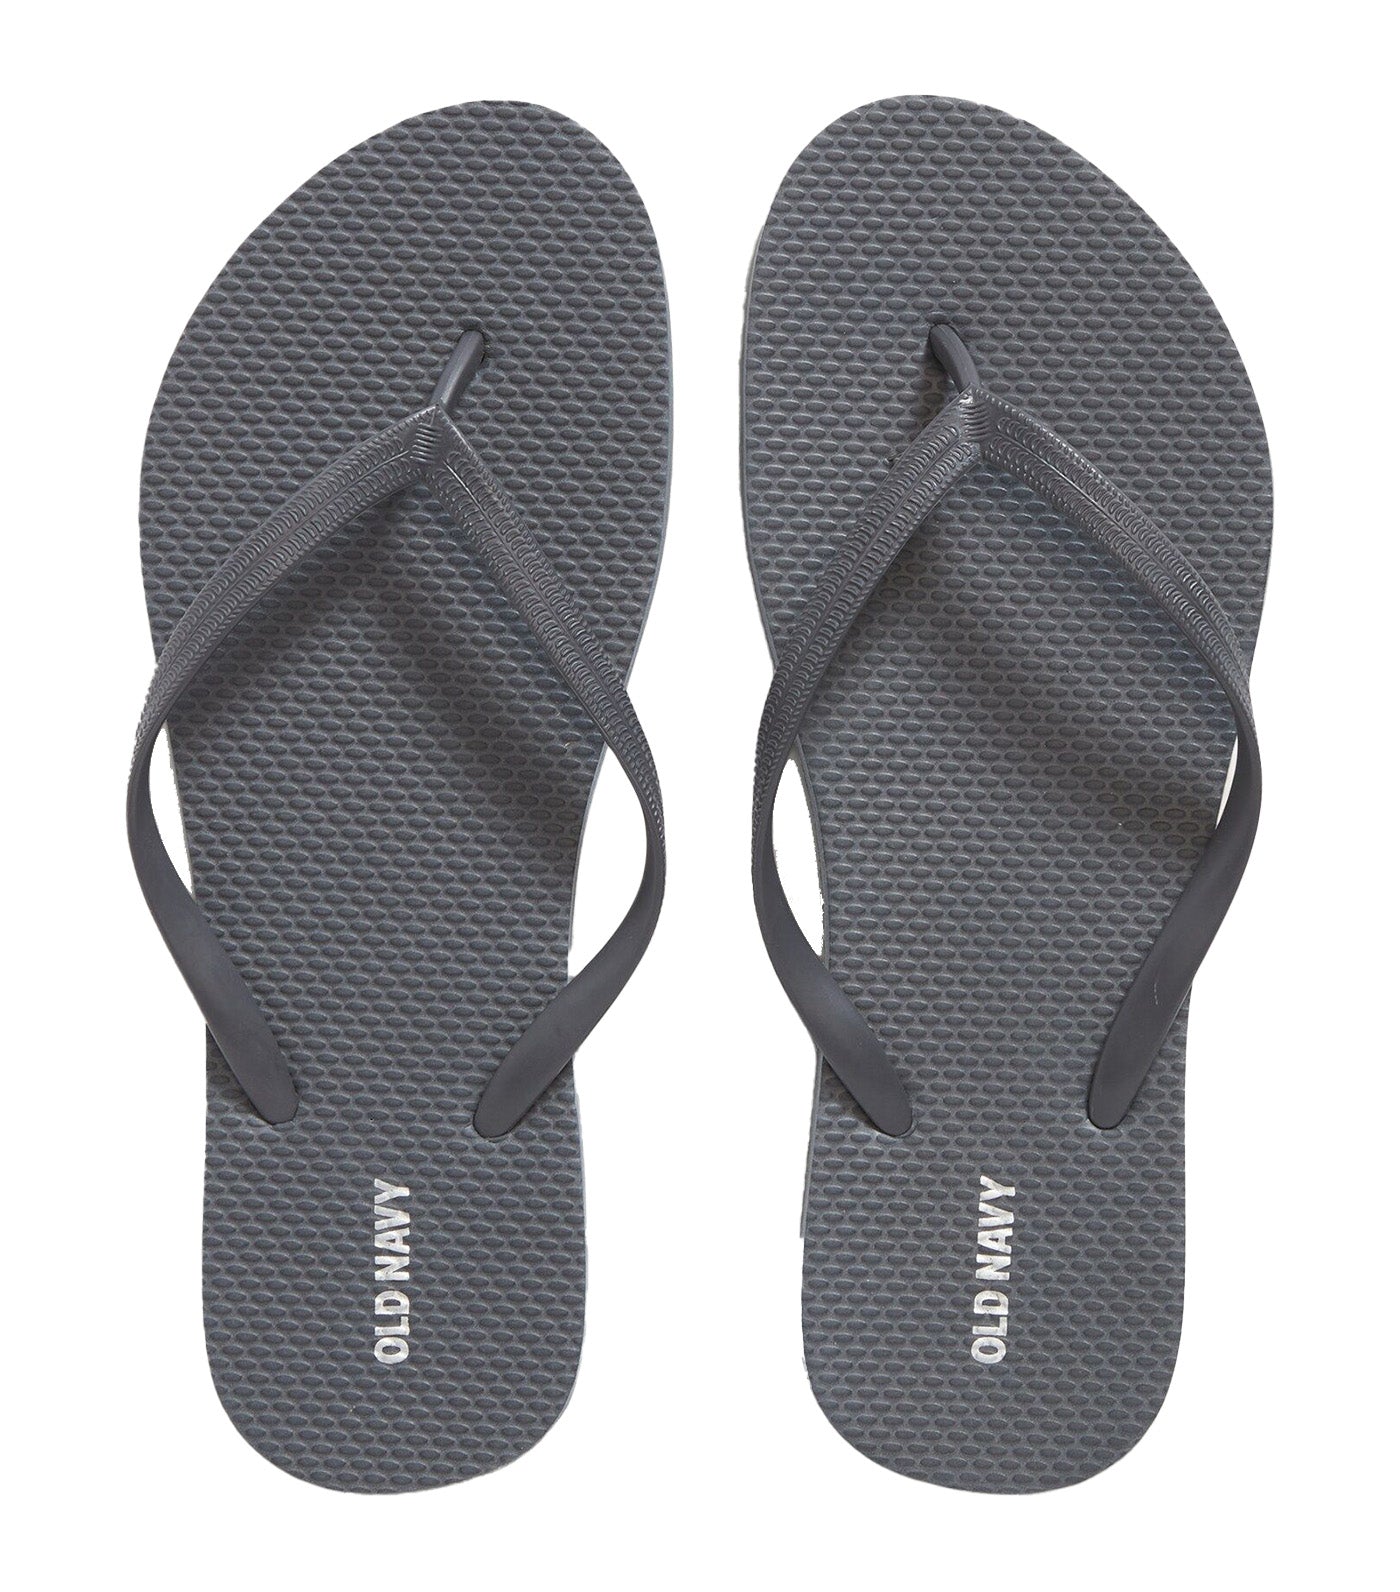 Flip-Flop Sandals for Women (Partially Plant-Based) Dark Gray